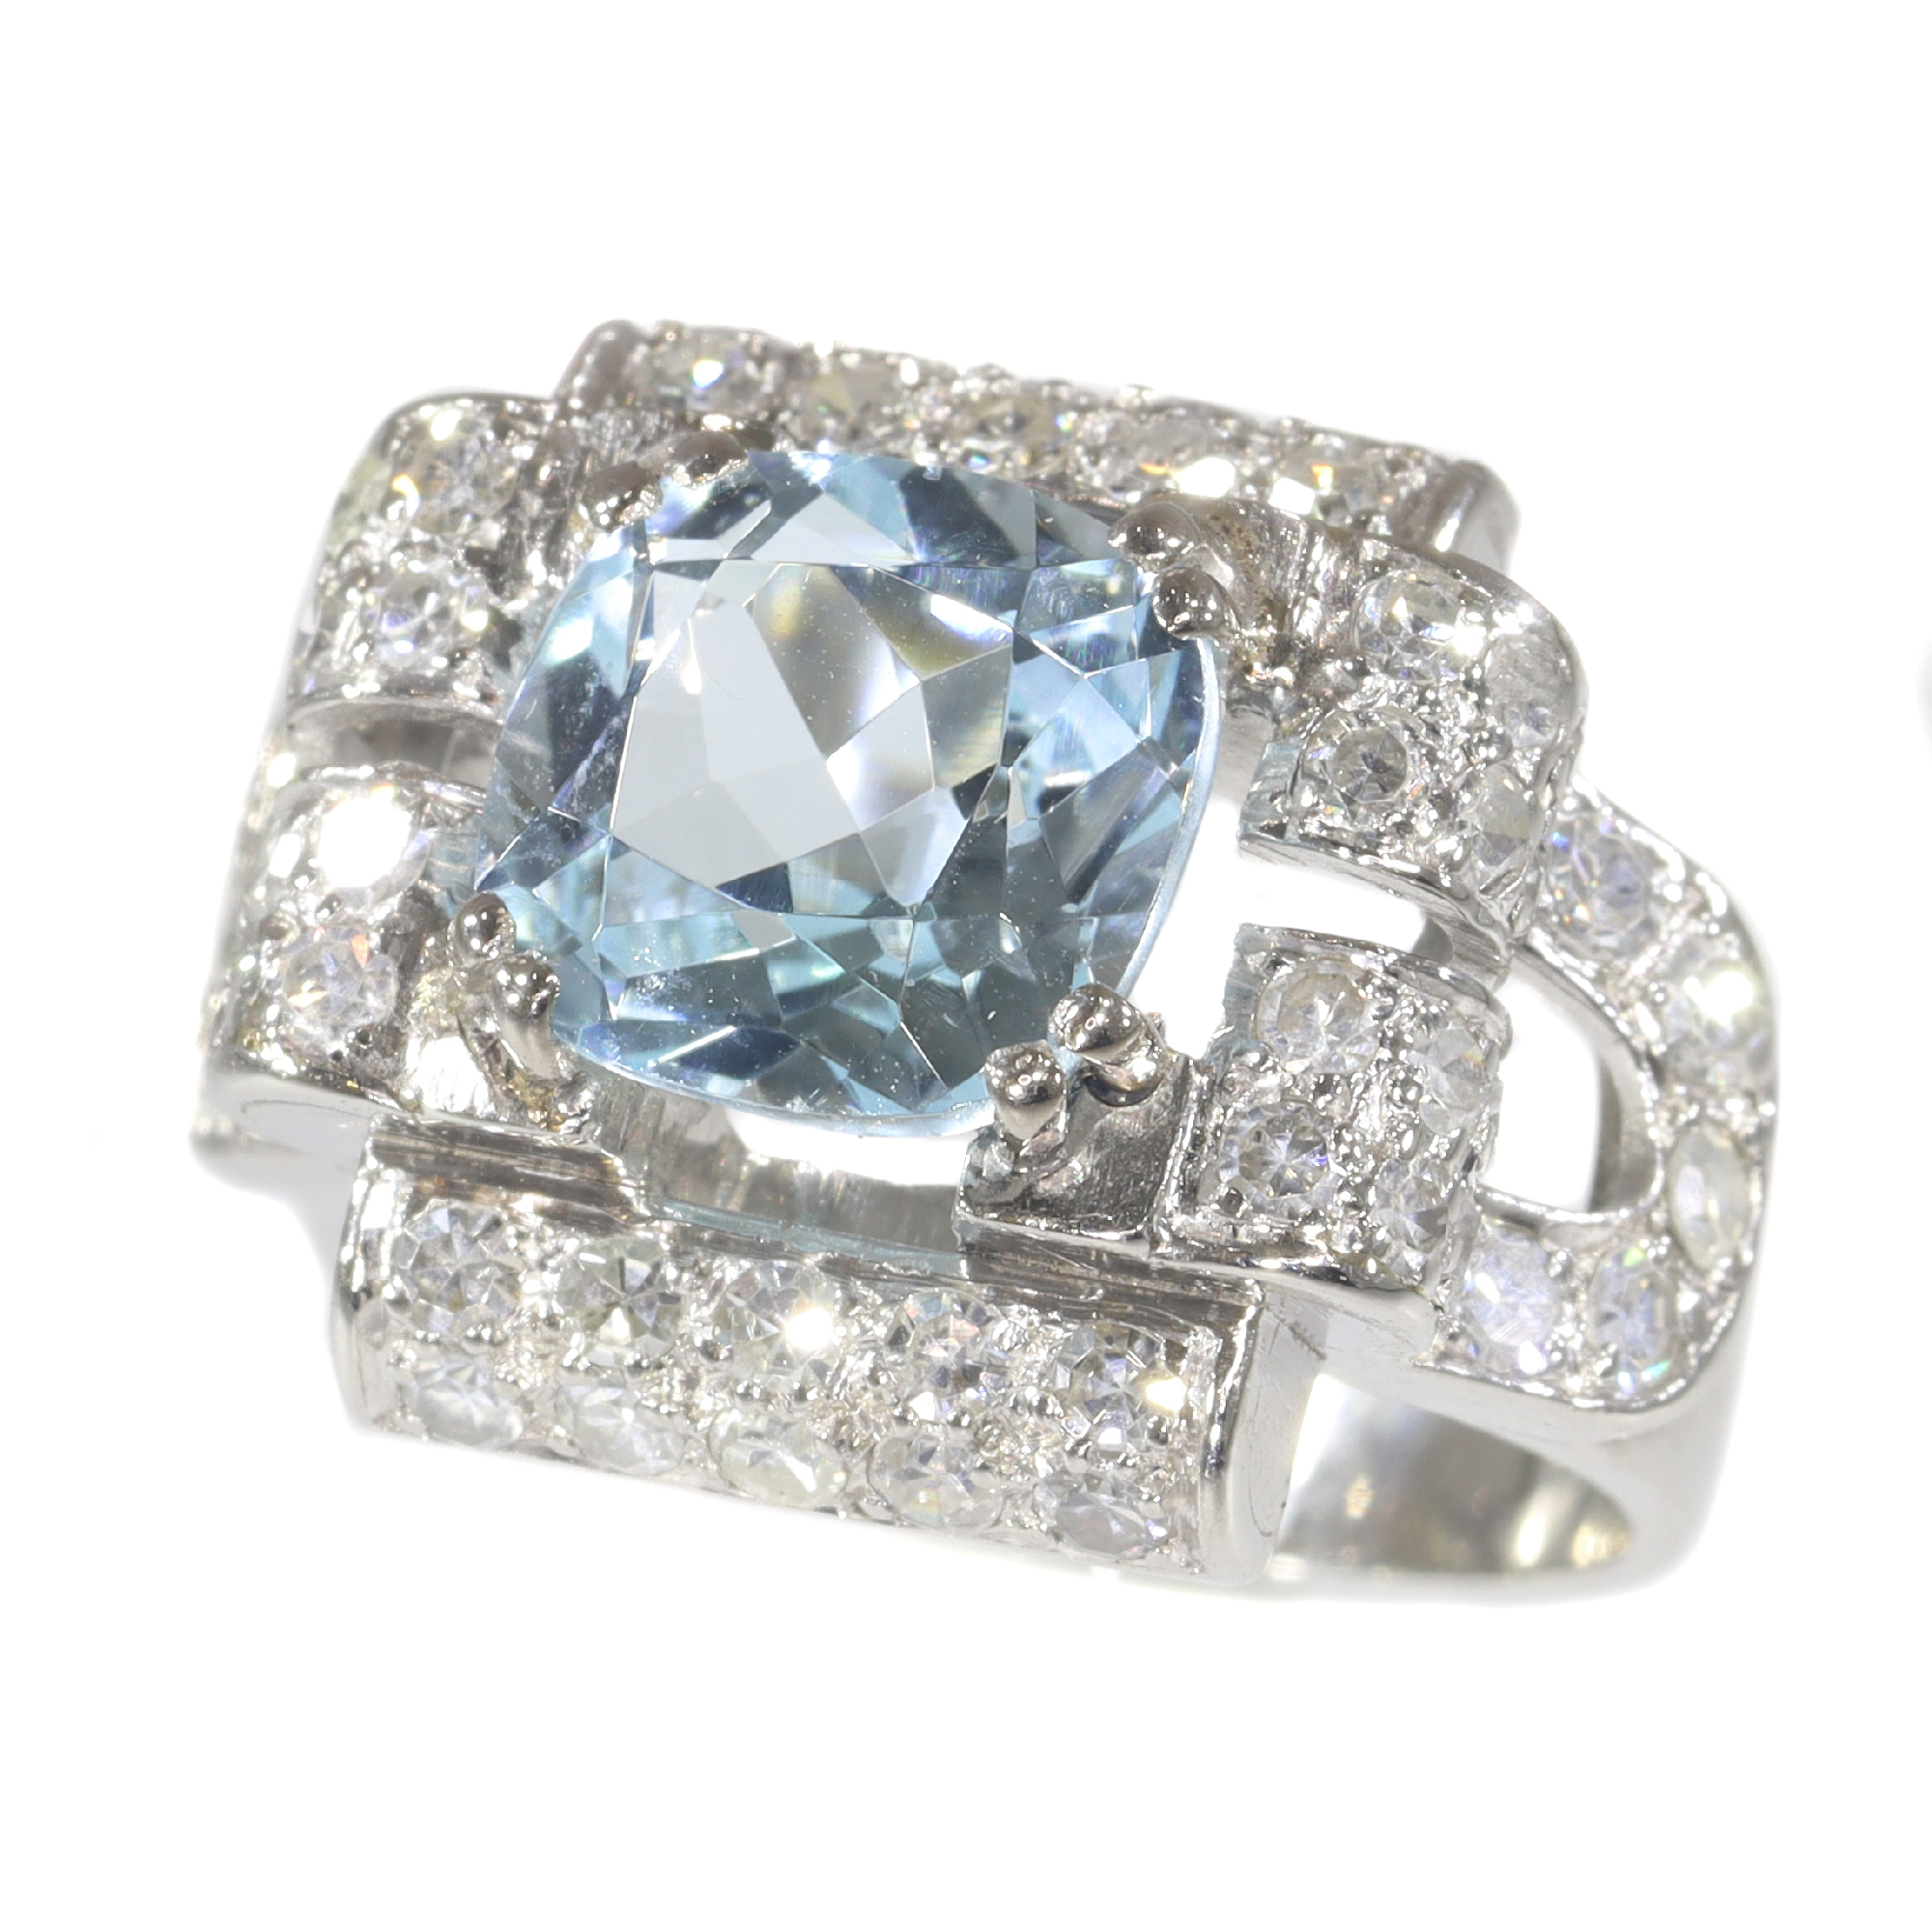 Vintage Fifties Art Deco diamond and blue topaz ring